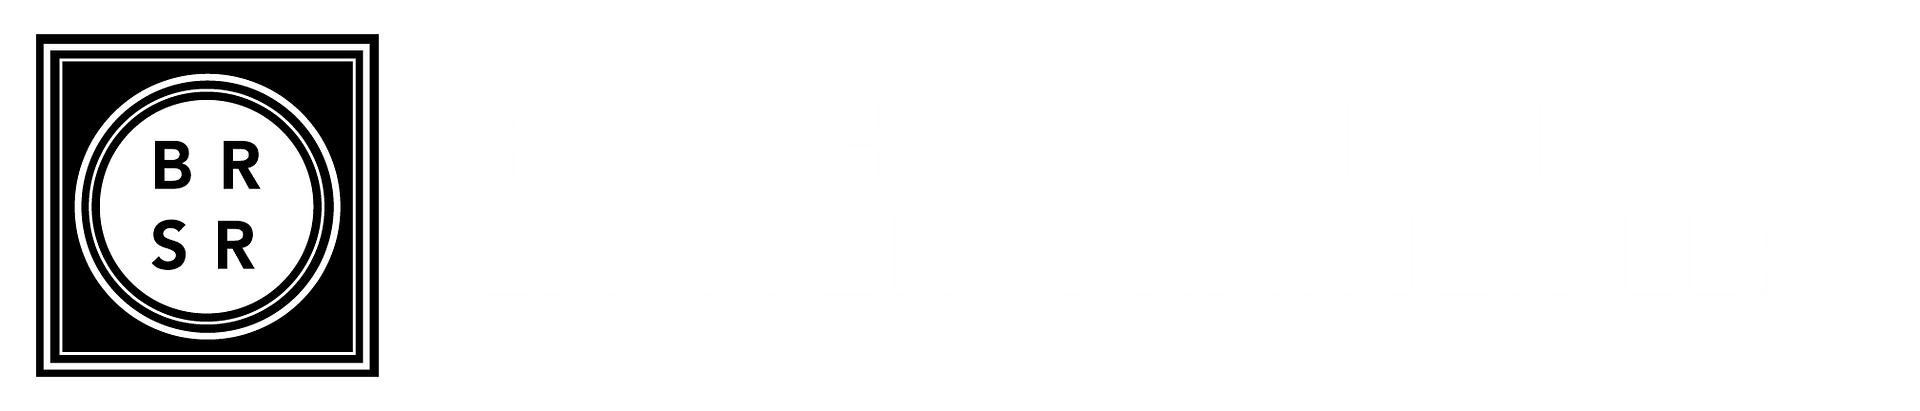 Bradshaw Robinson Slawter & Rainer LLP